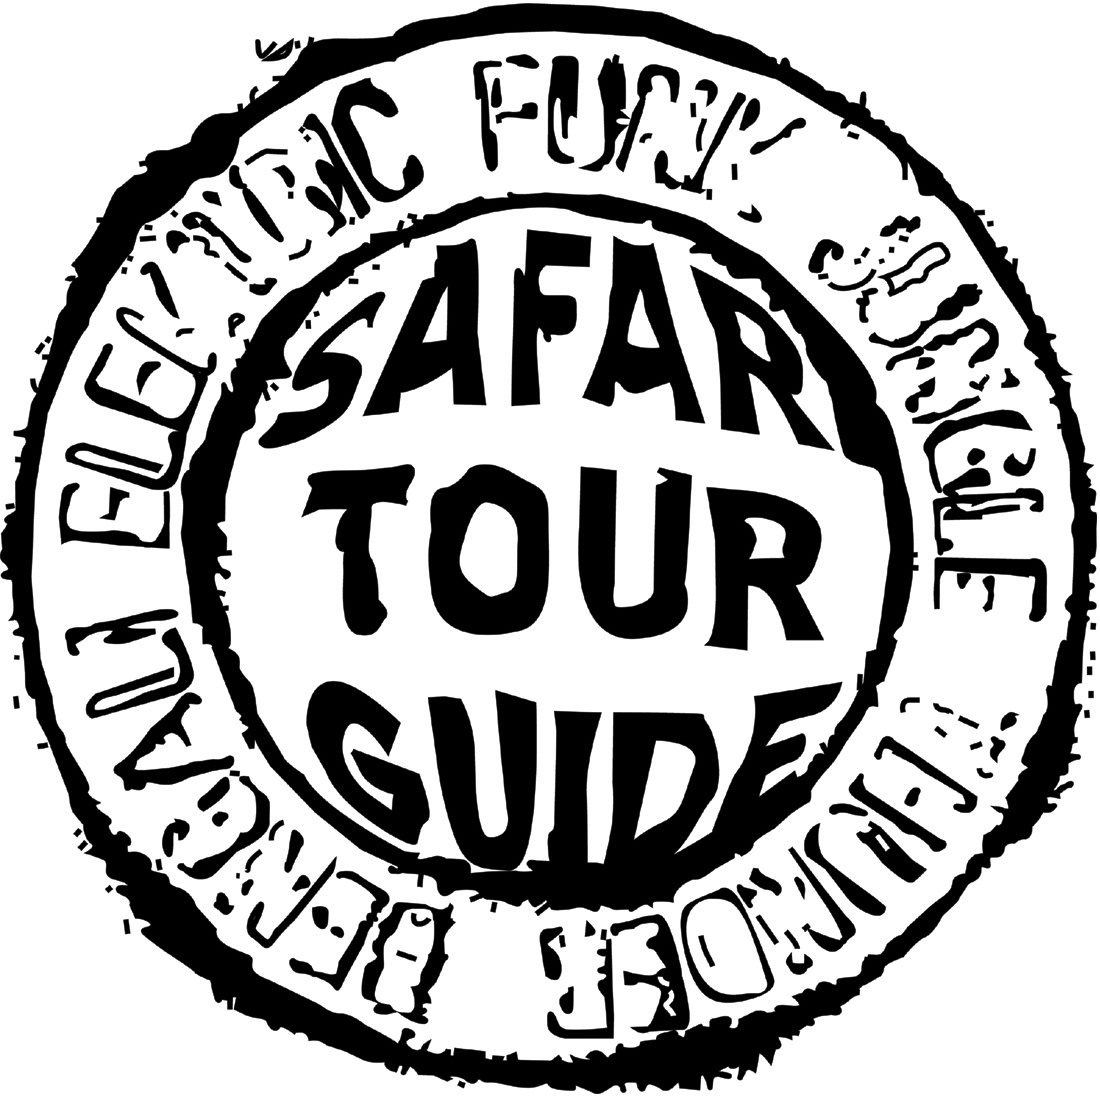 Safari Tour Guide T Shirt preview image.